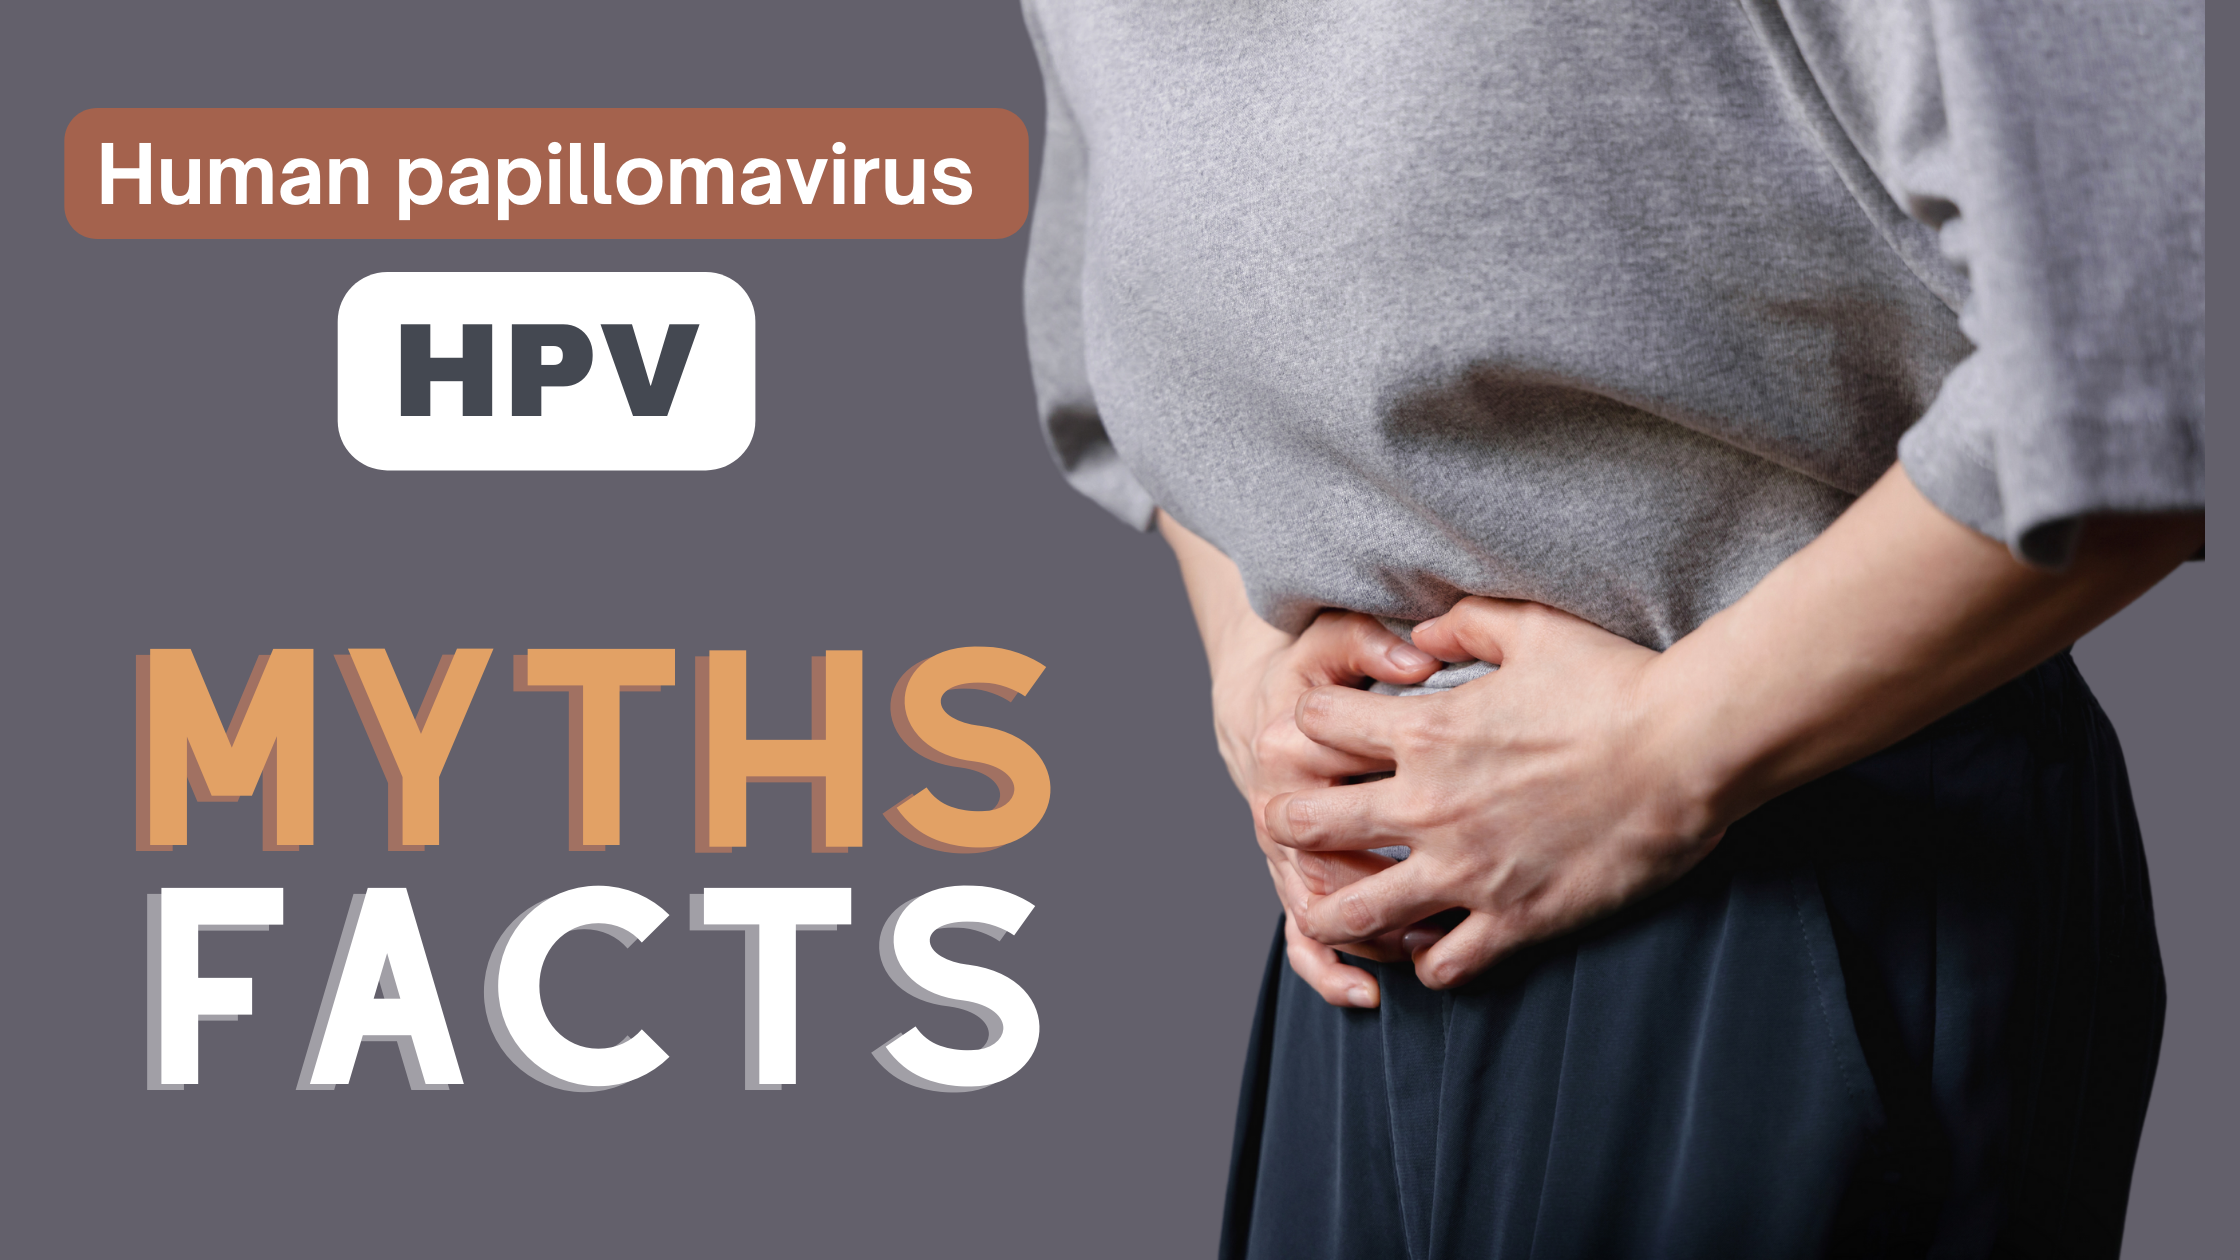 Human papillomavirus (HPV) Myths v/s Facts